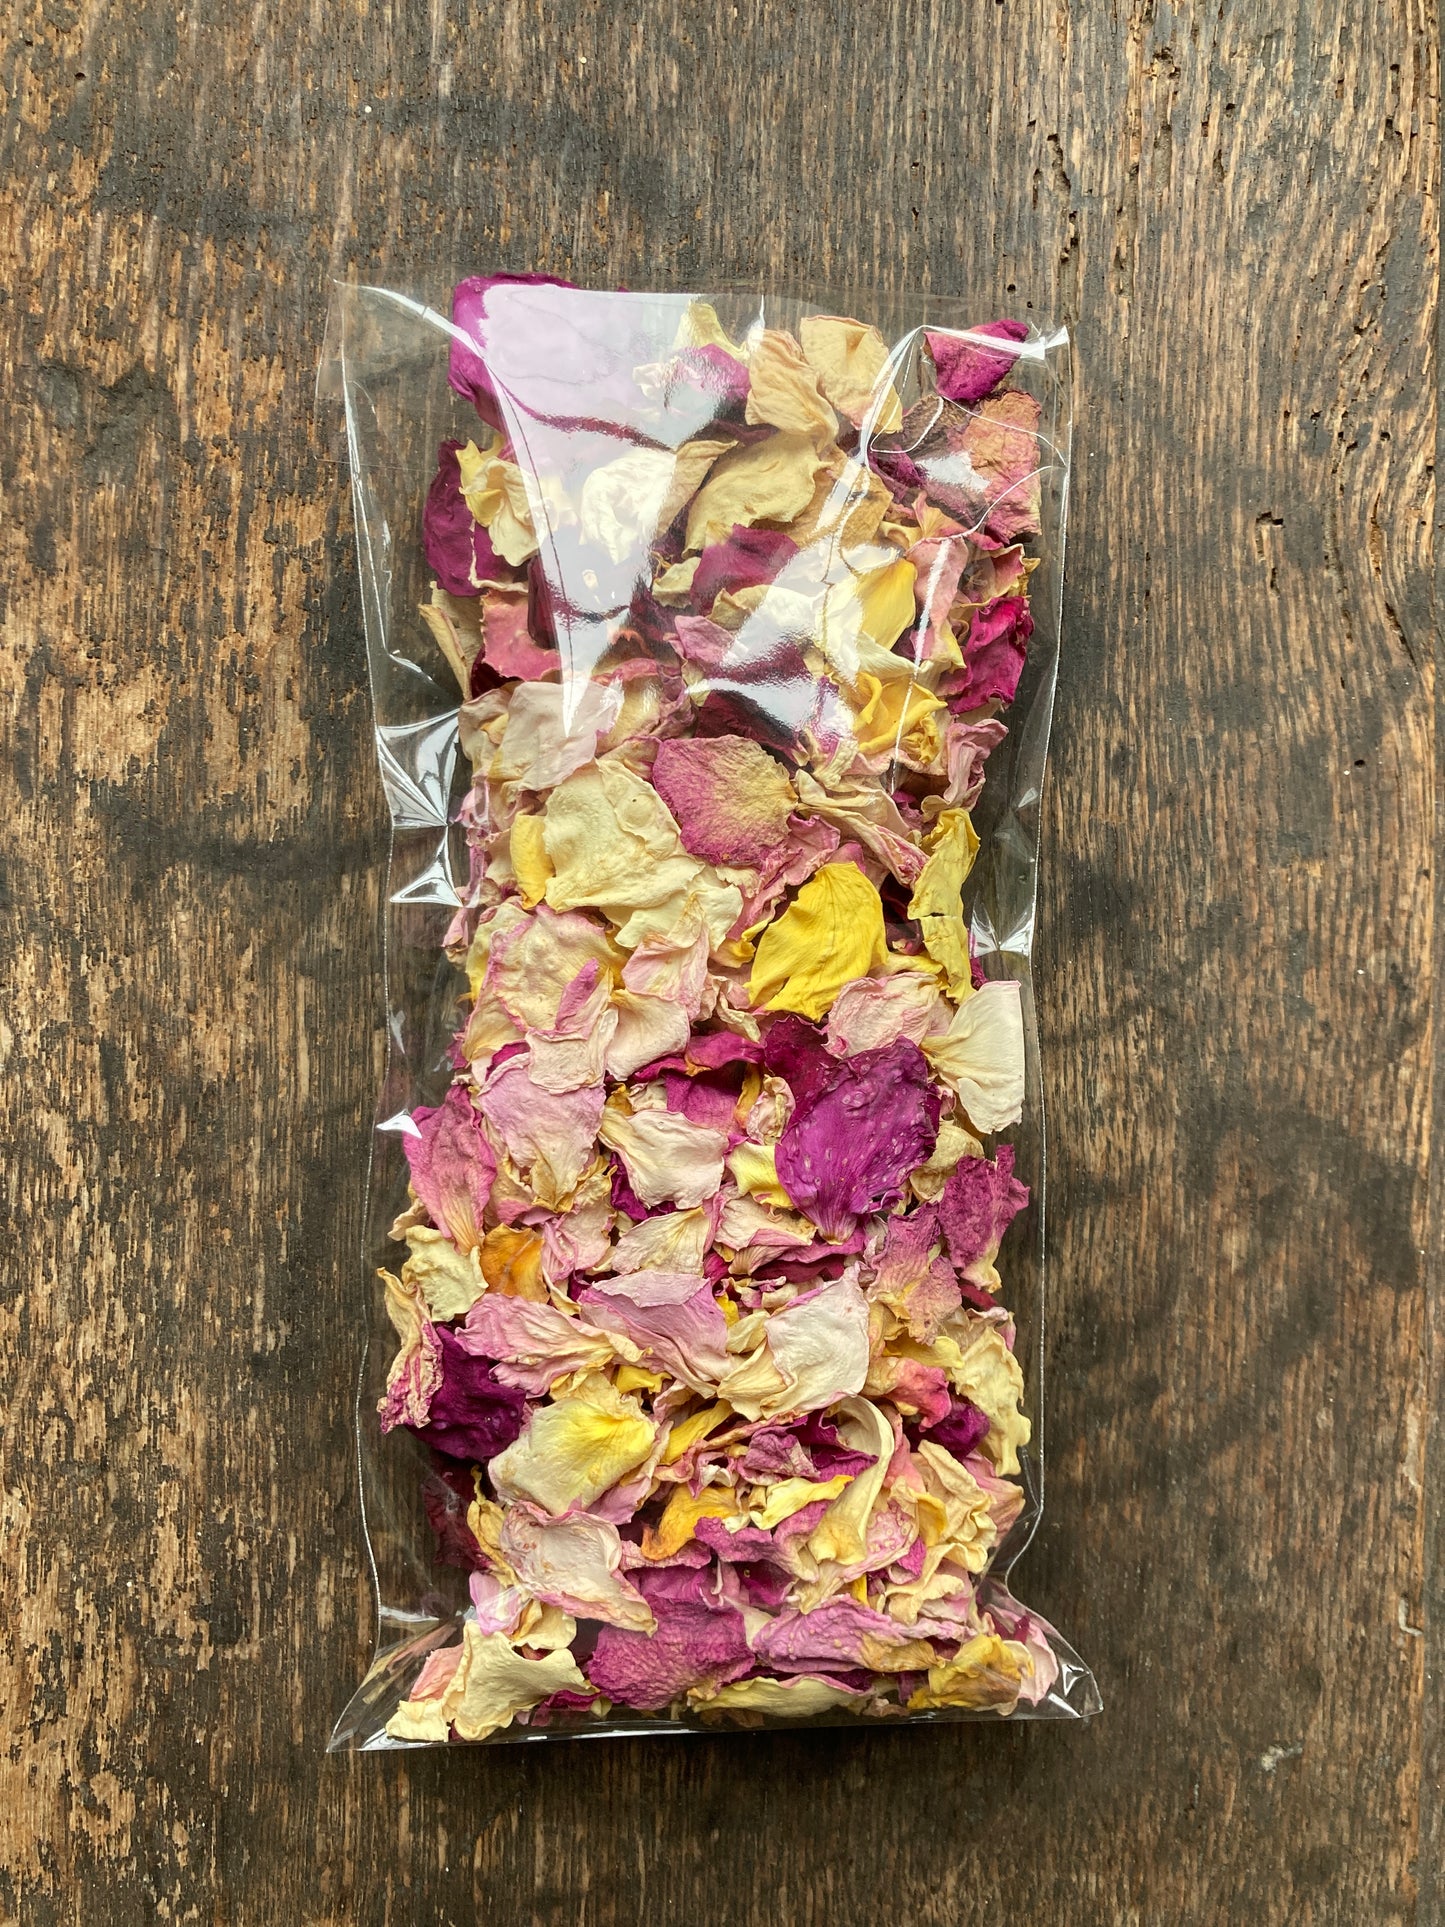 Dried Rose Petals - 20g